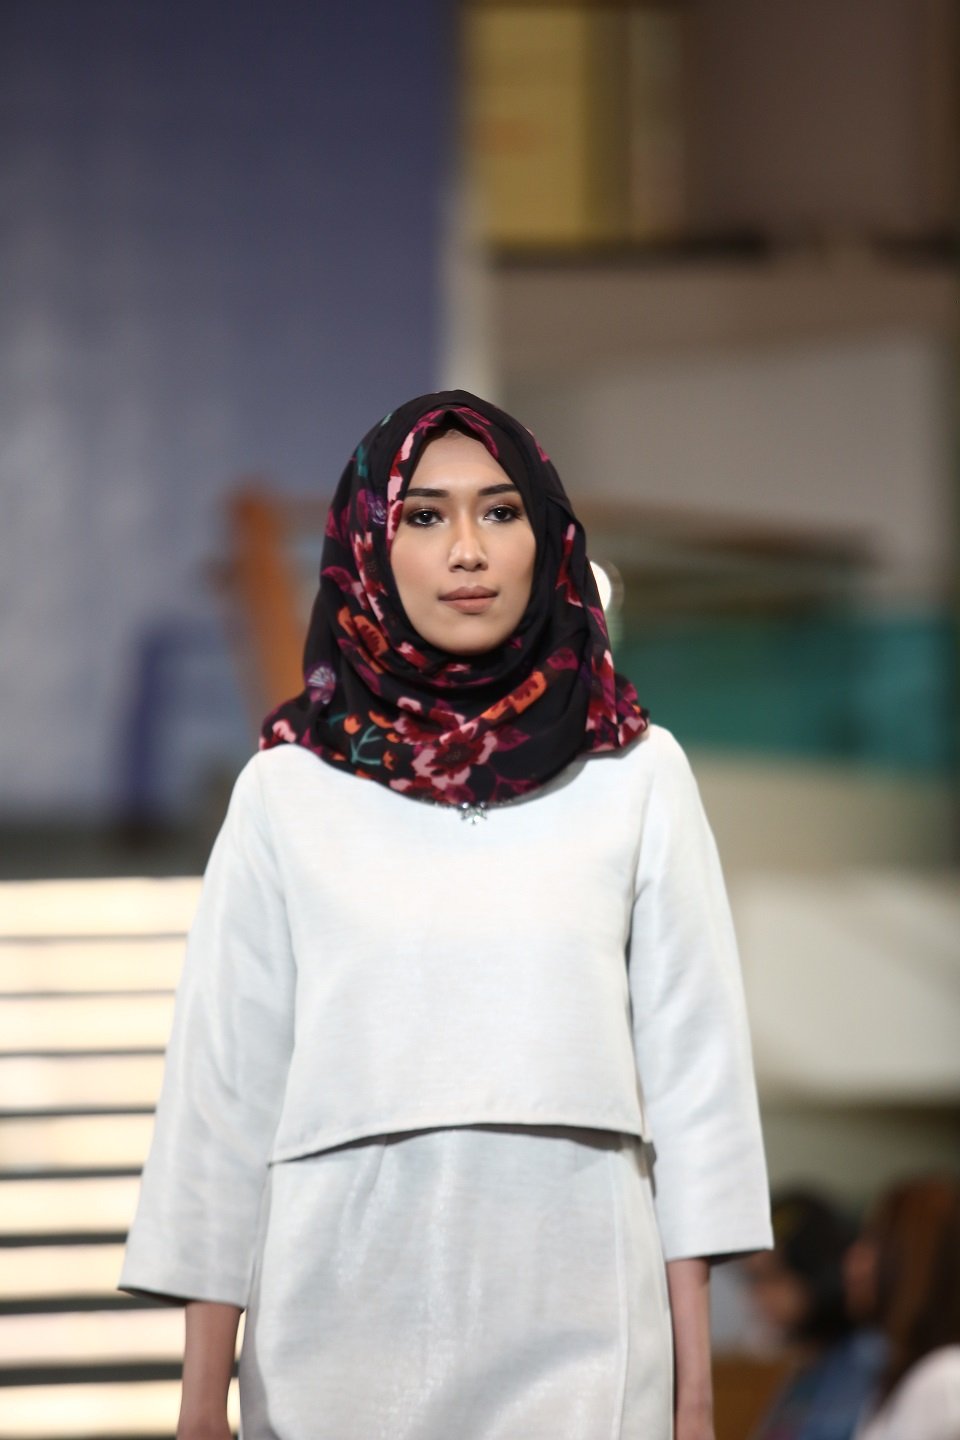 Brand Hijab Instan "Bokitta" Sasar Muslimah Indonesia